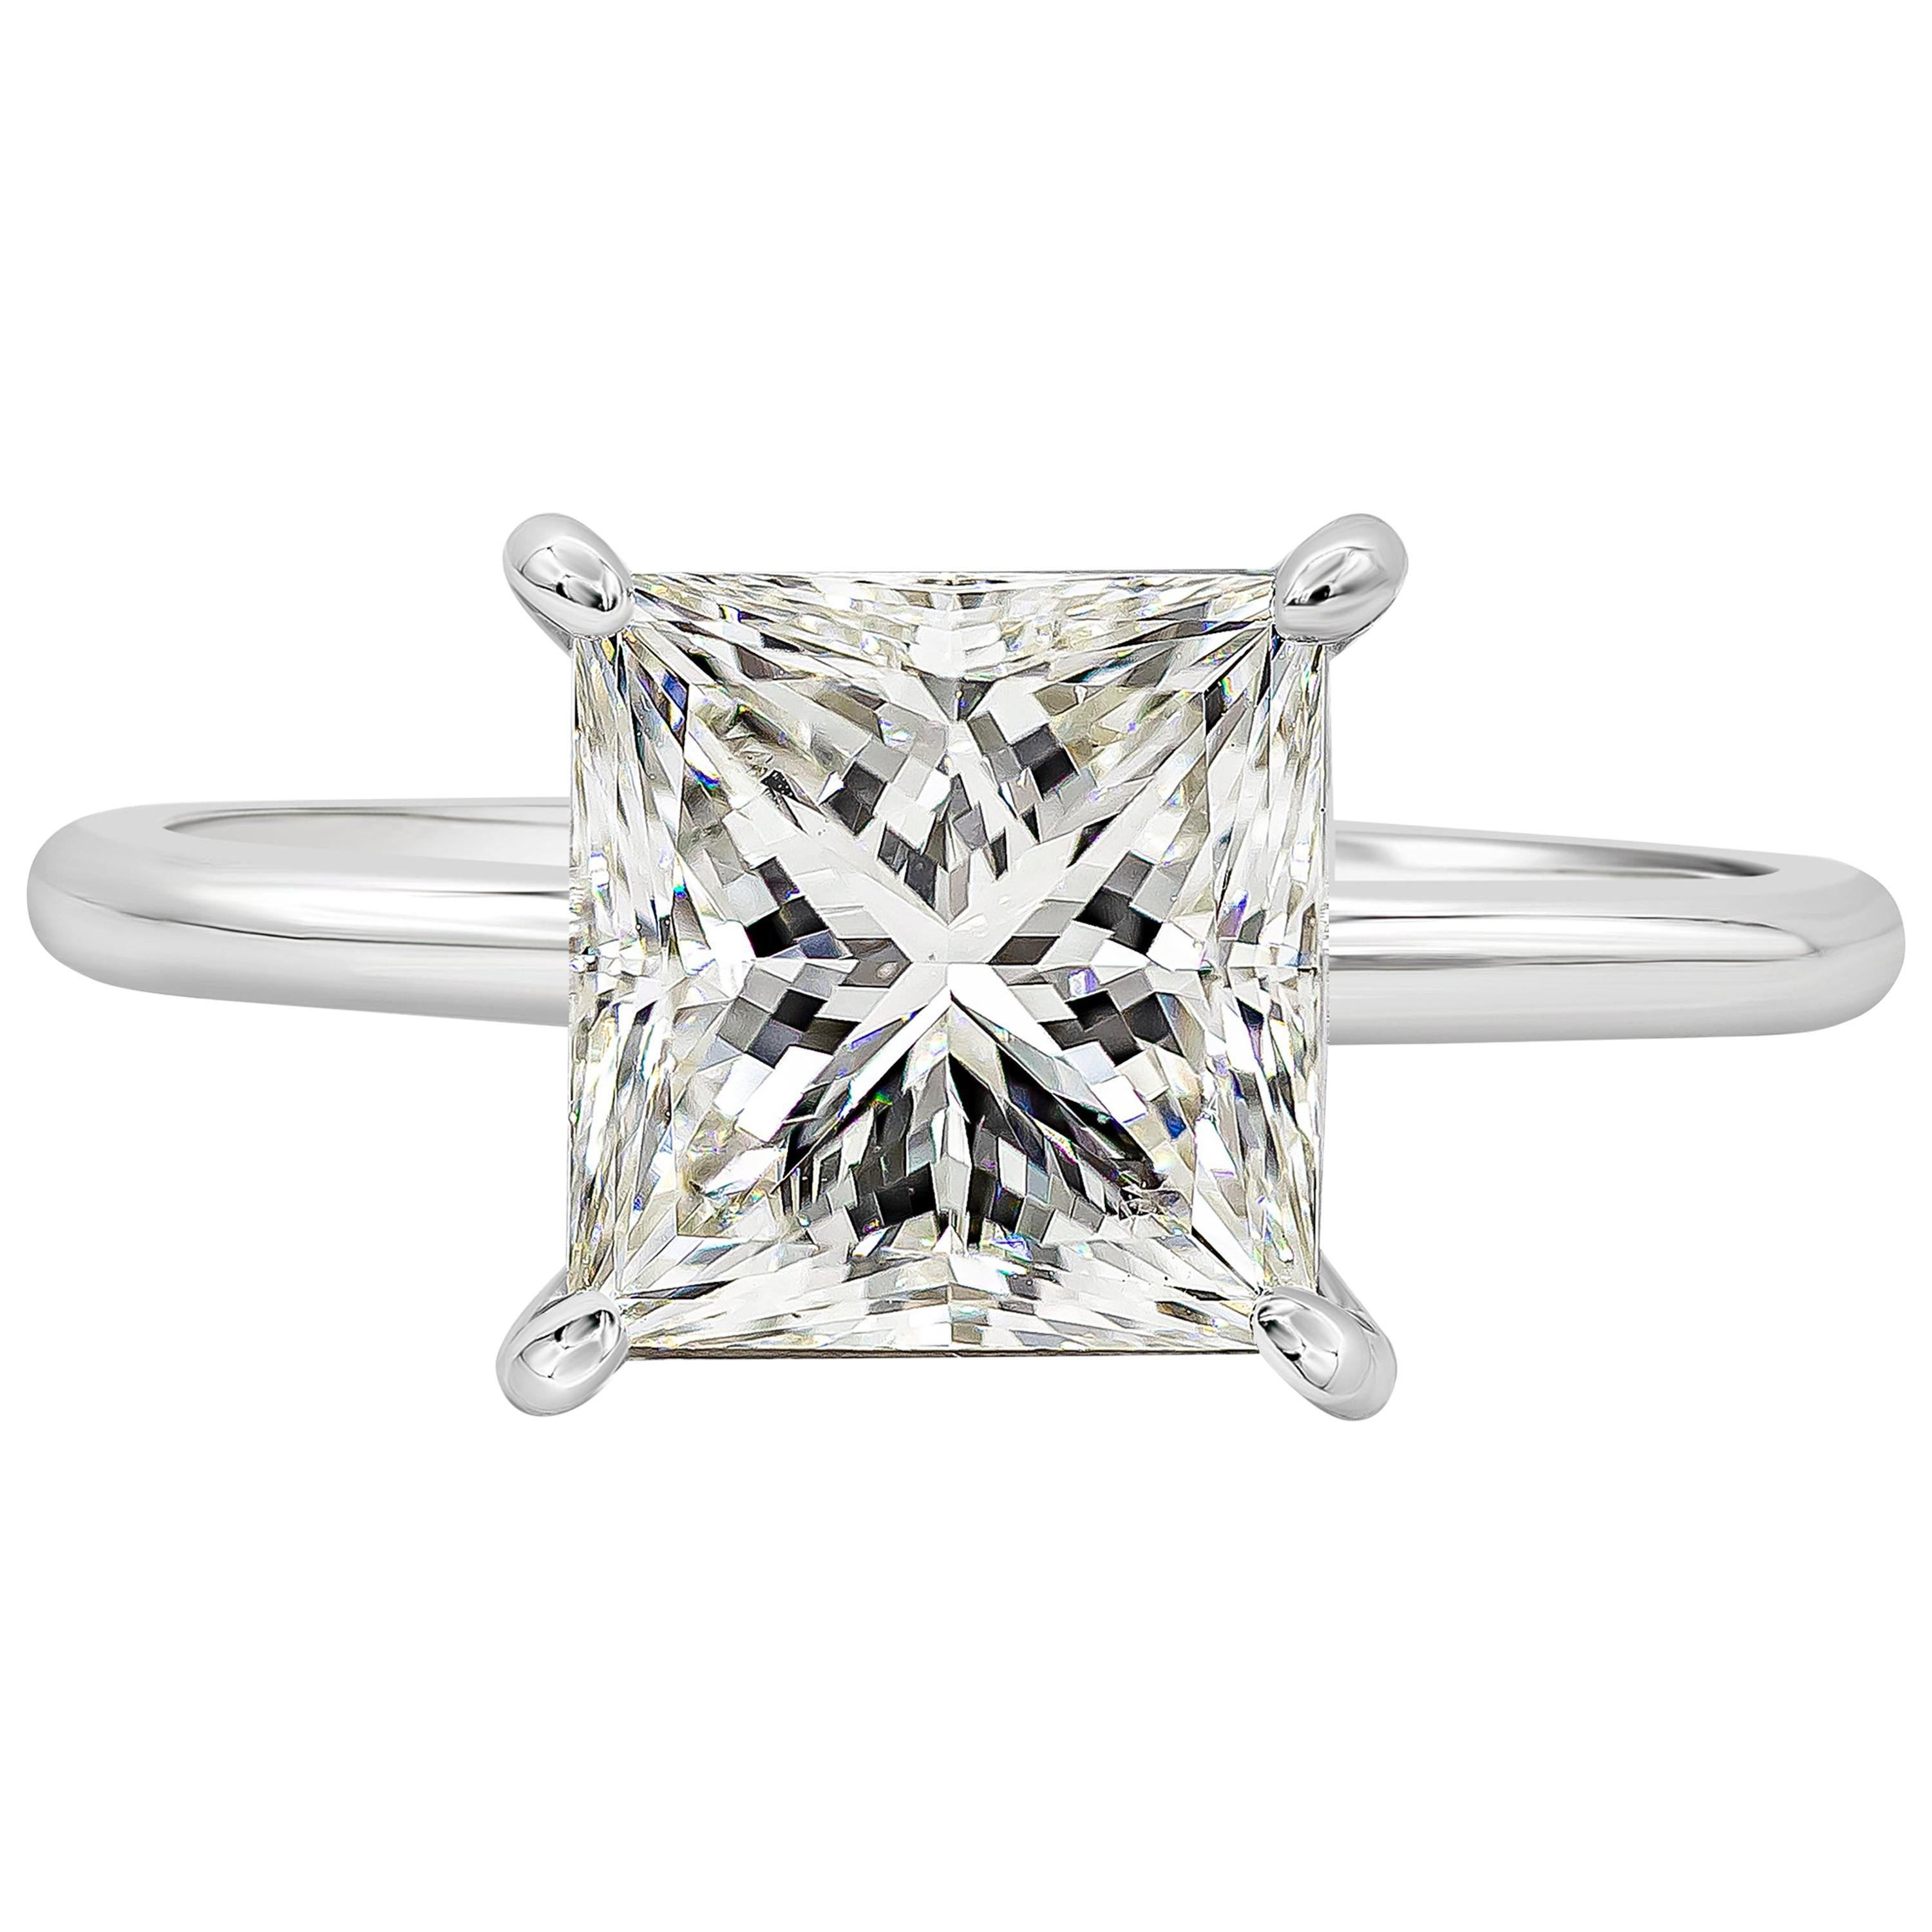 GIA Certified 3.06 Carat Princess Cut Diamond Solitaire Engagement Ring